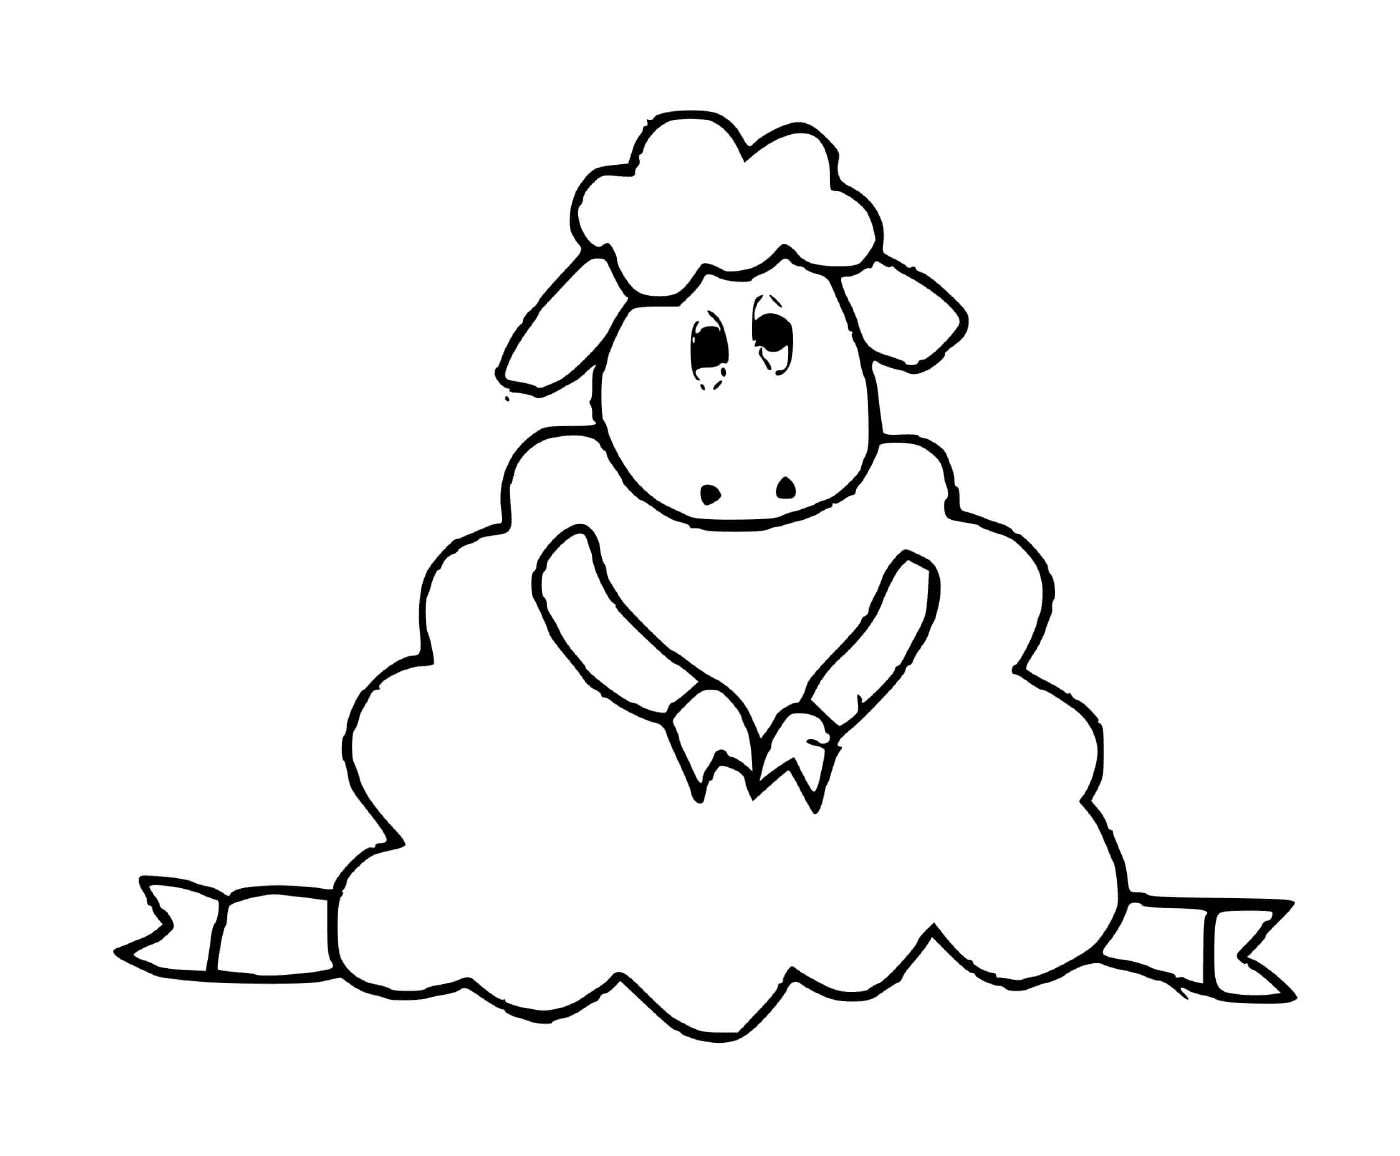  овцы сидят на облаках 